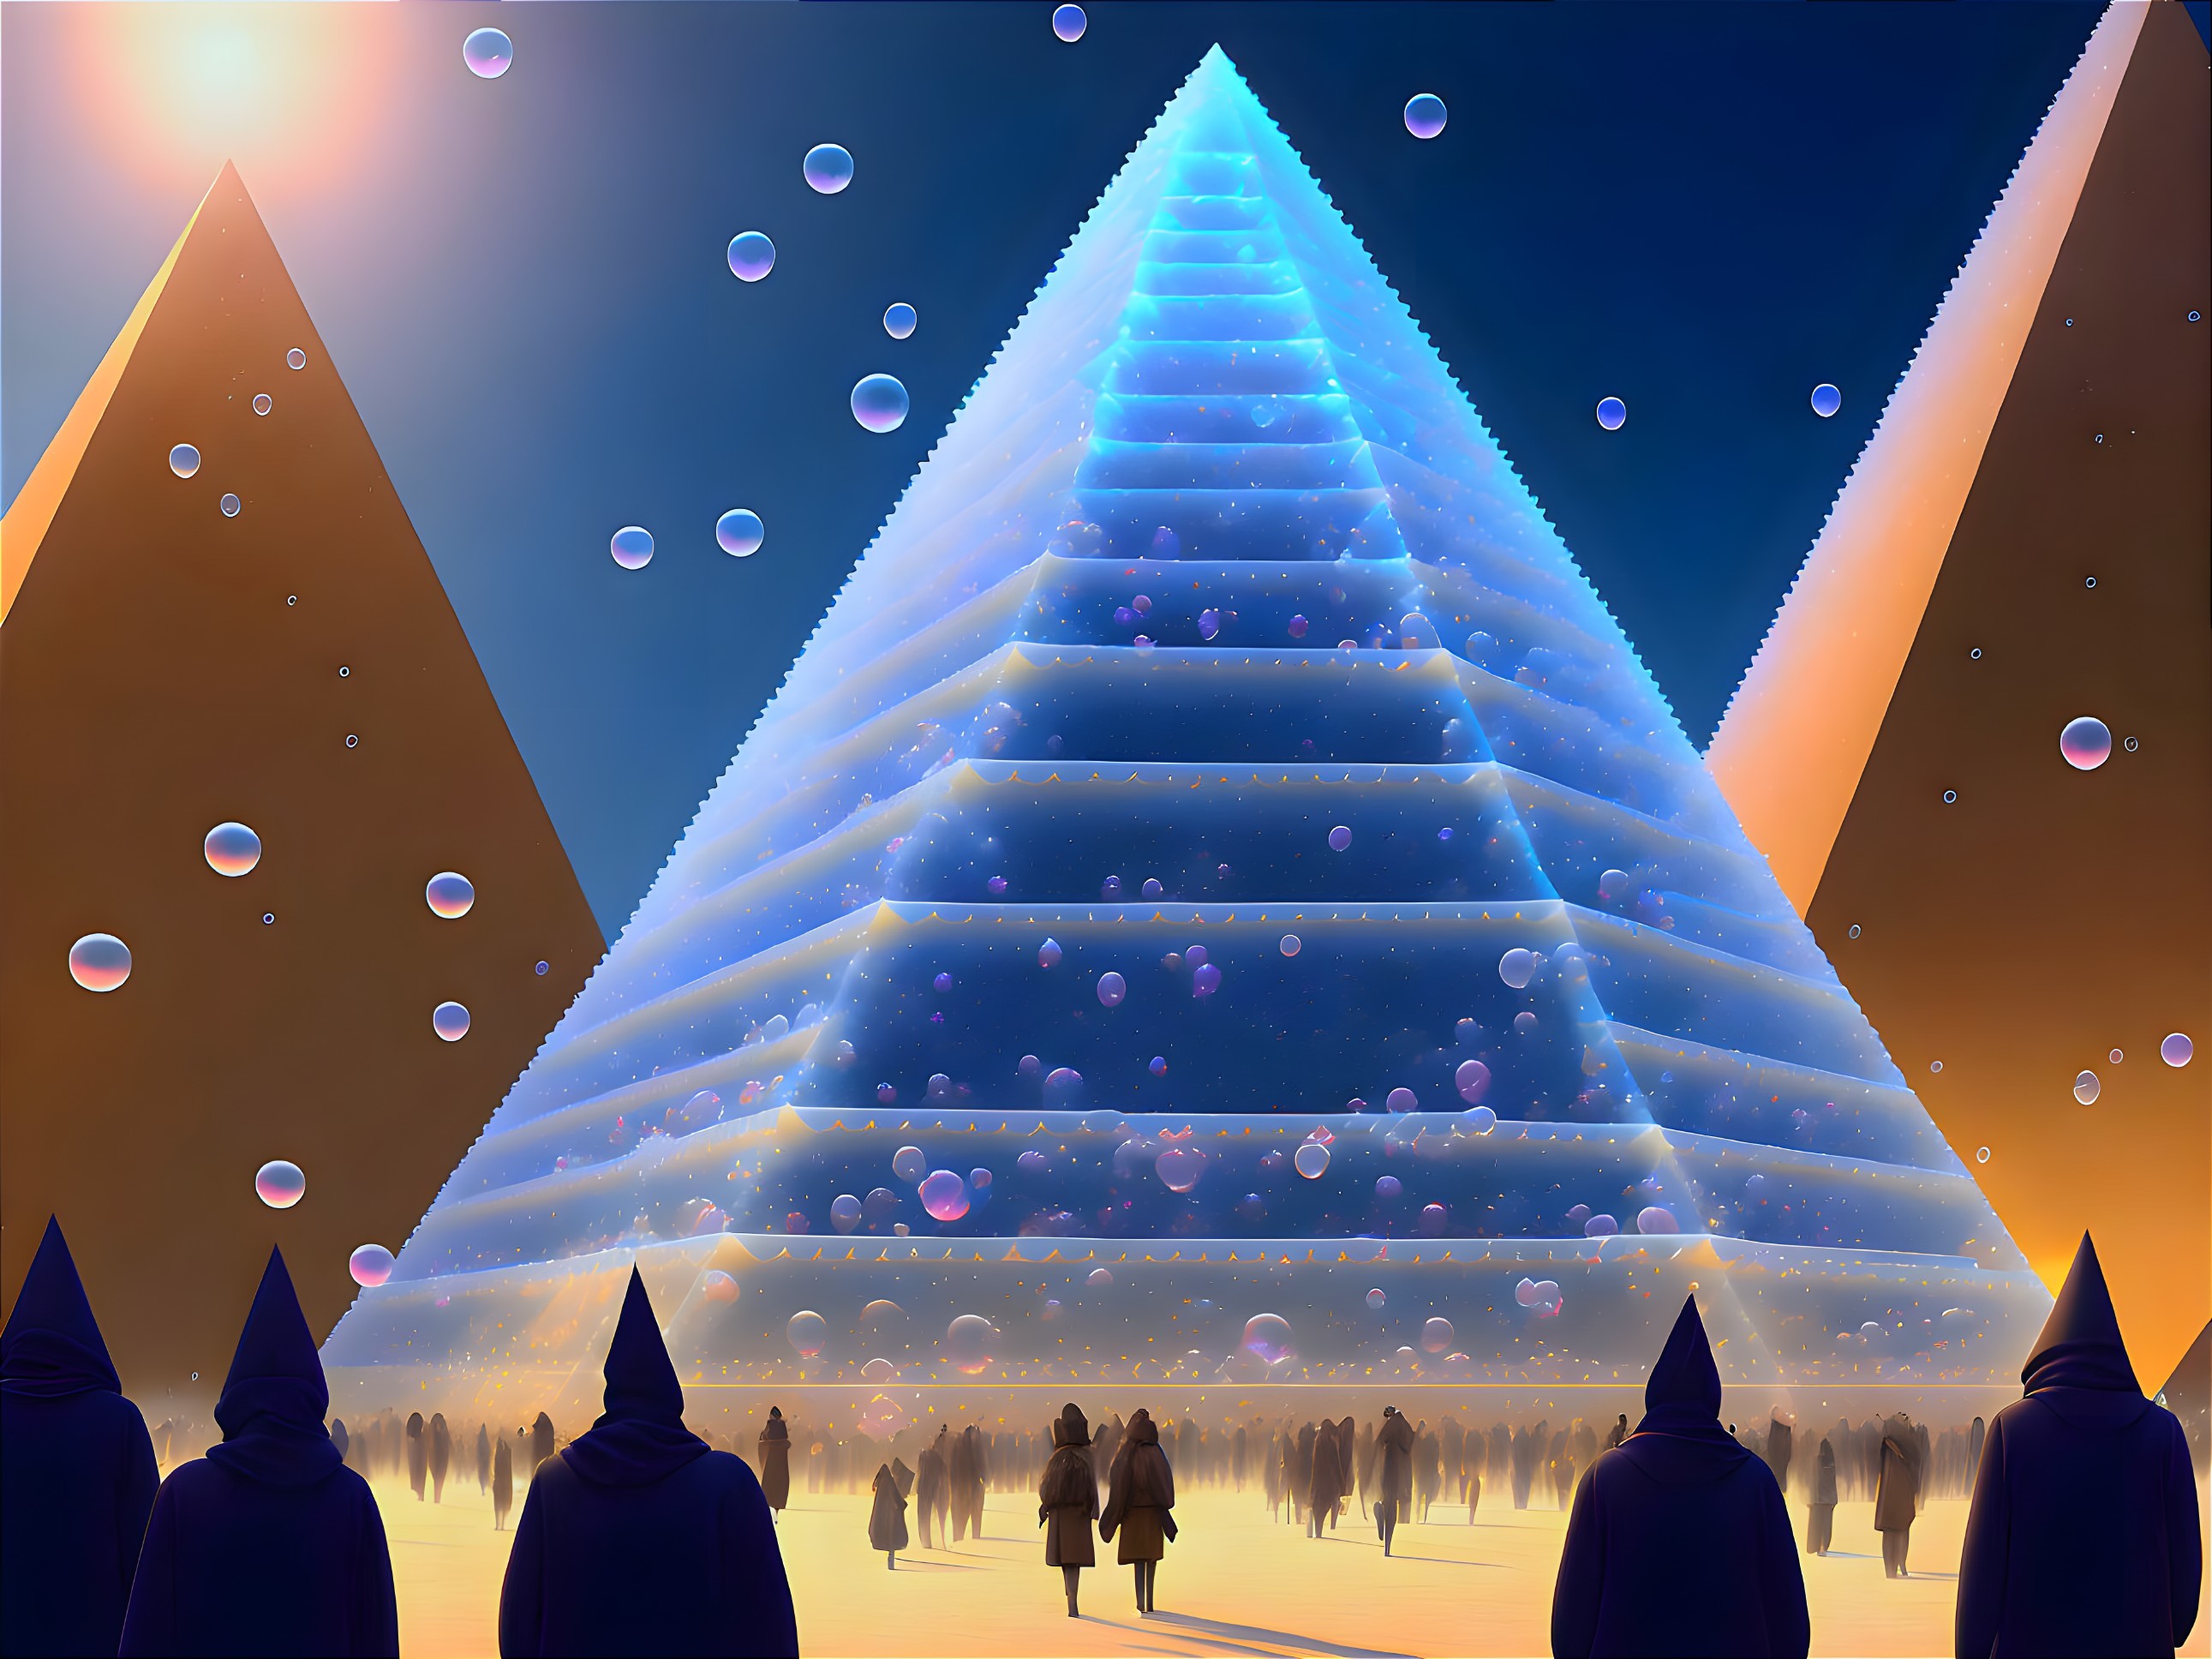 A social pyramid scheme to capture human souls